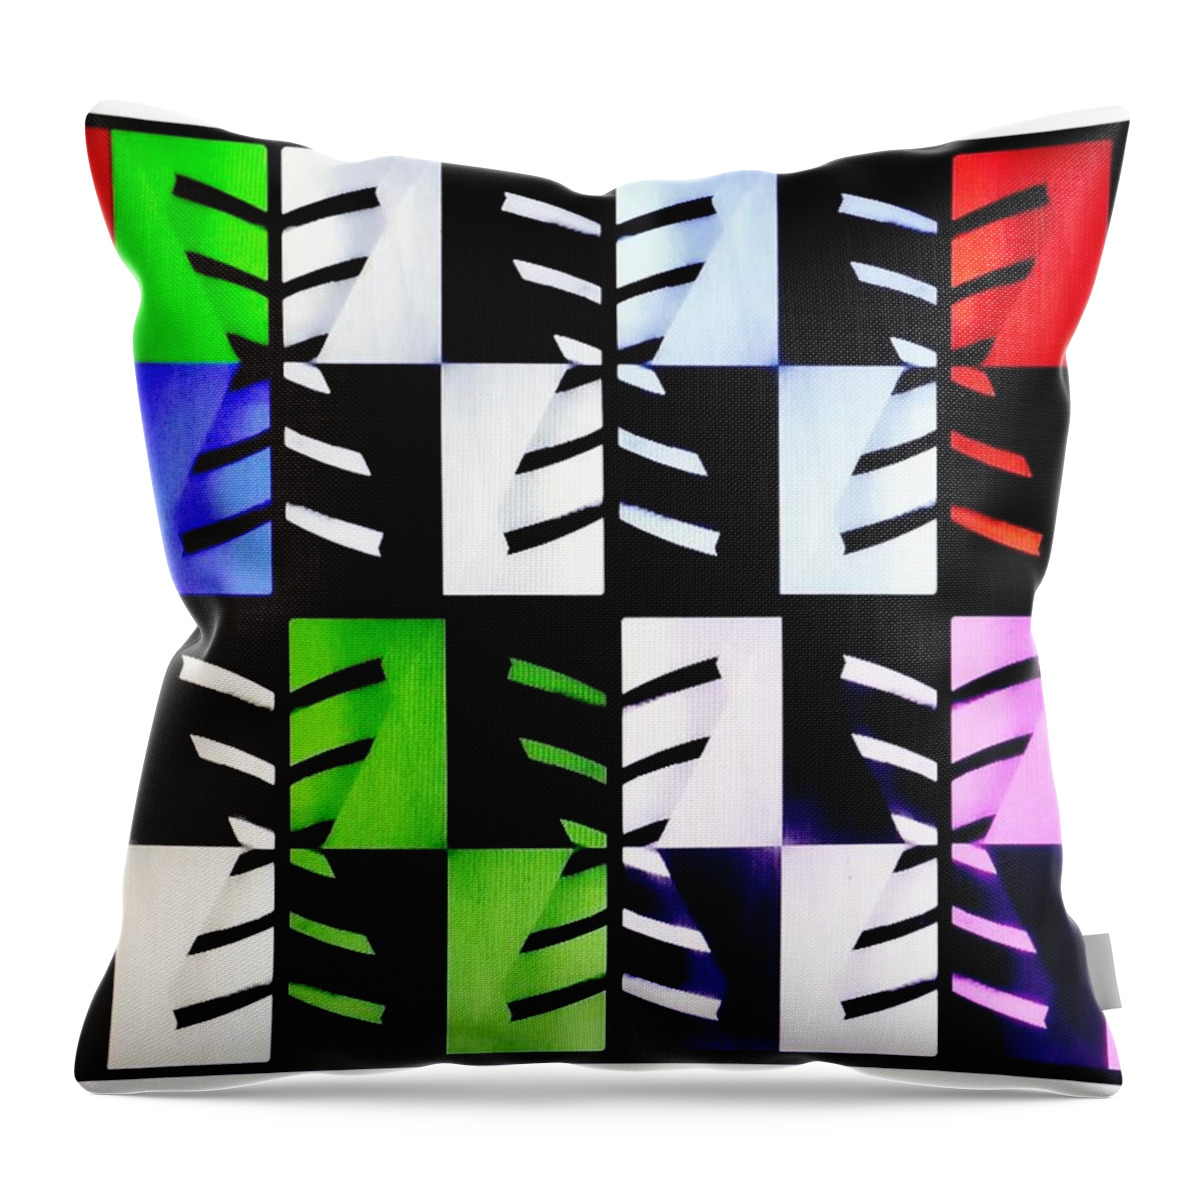 Guggenheim Throw Pillow featuring the photograph Guggenheim Multimirror by Rob Hans